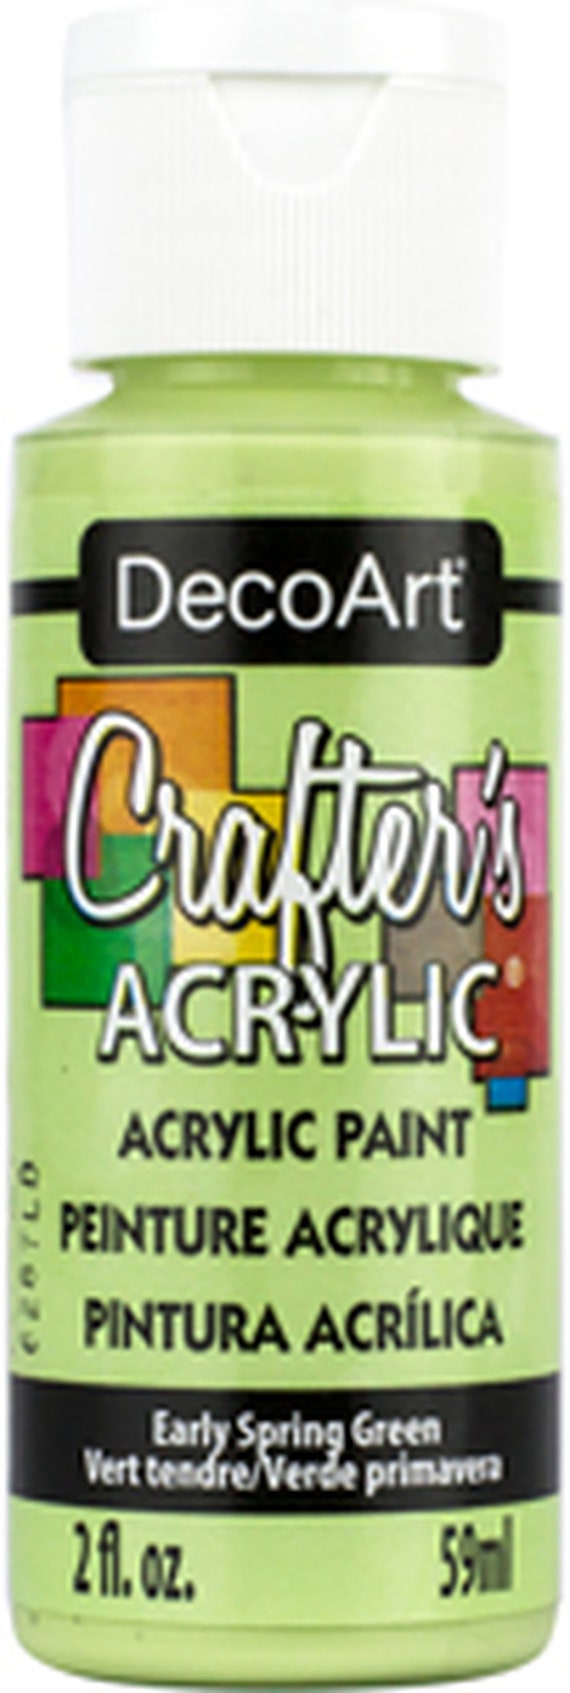 Deco Art Americana Acrylic Paint - Bright Green